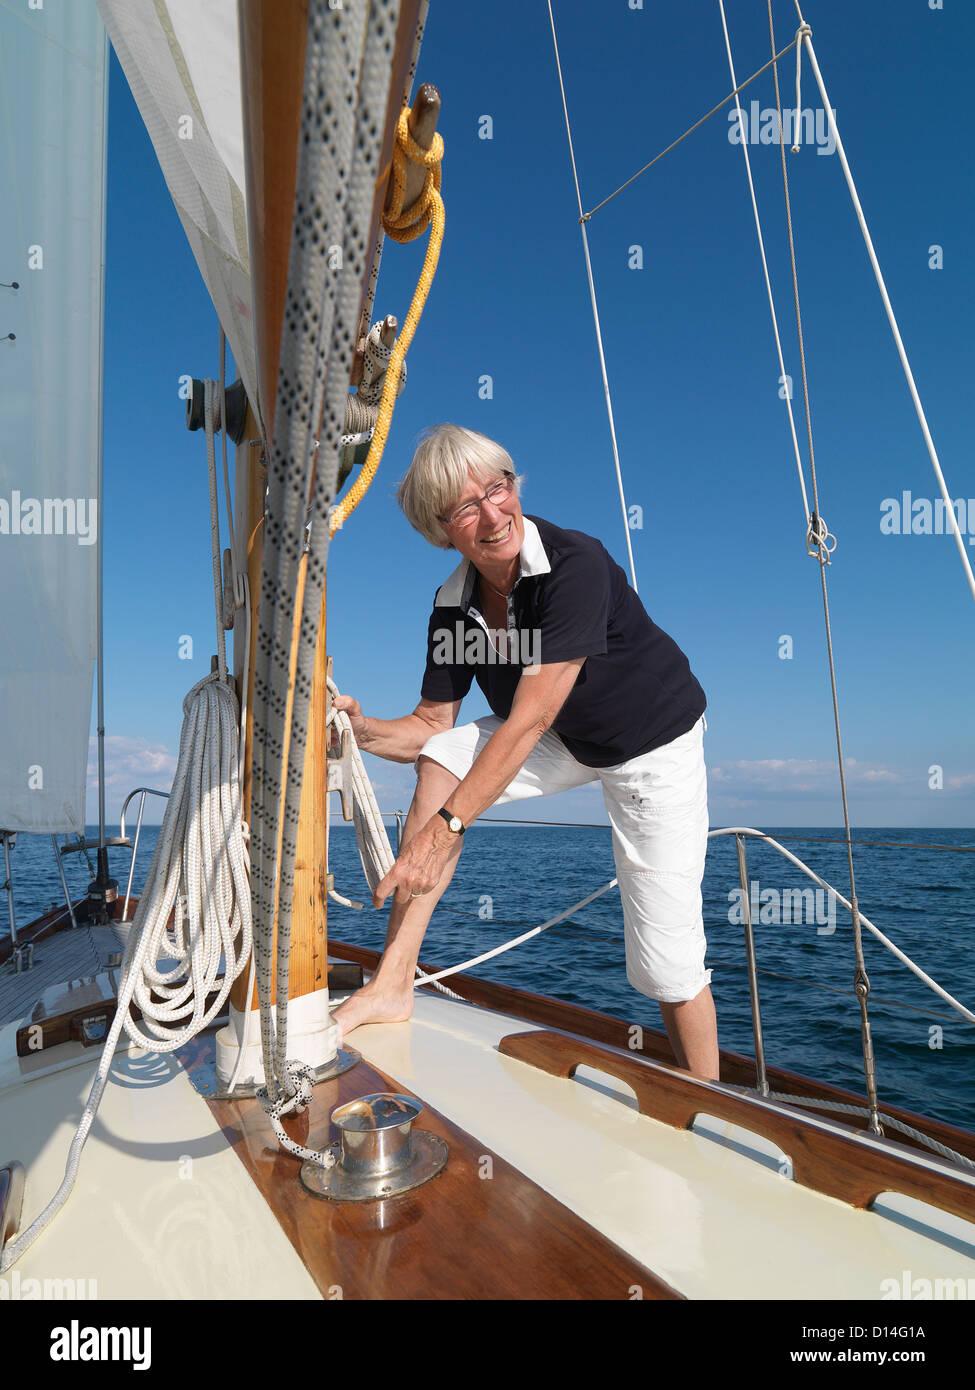 Woman adjusting rigging on sailboat Stock Photo